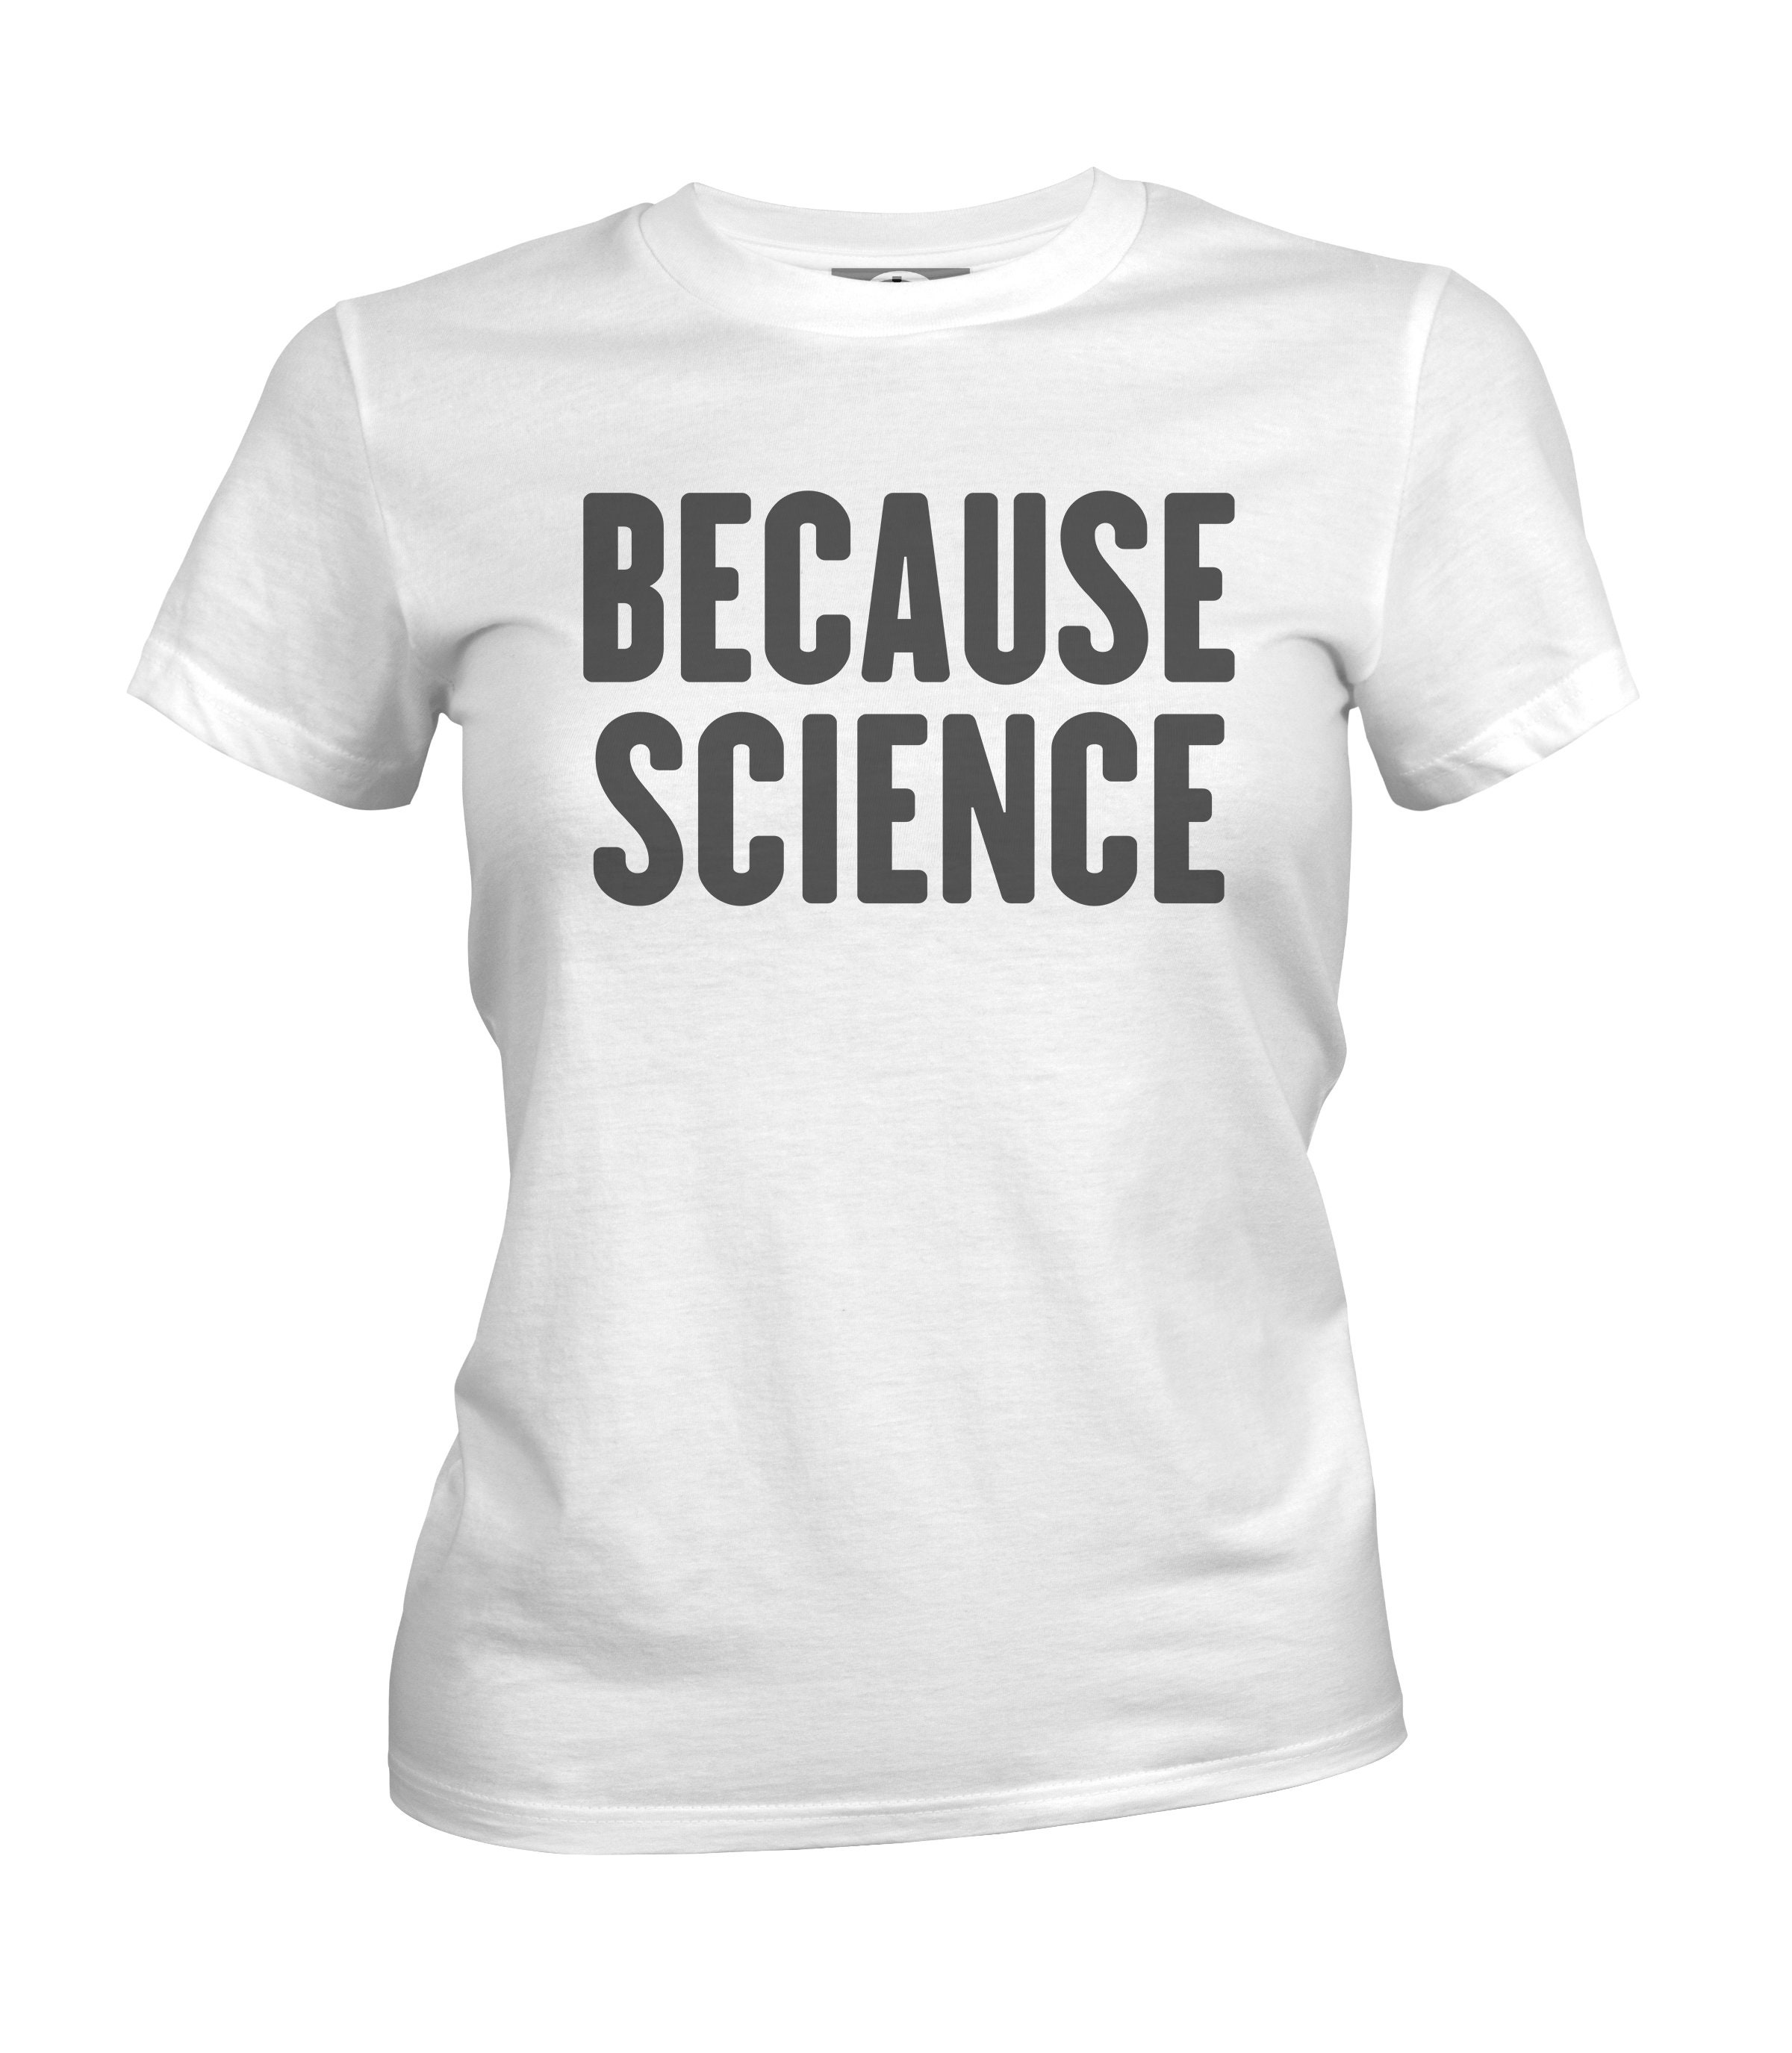 Because Science Tee shirtsbecause sciencesciencescience | Etsy